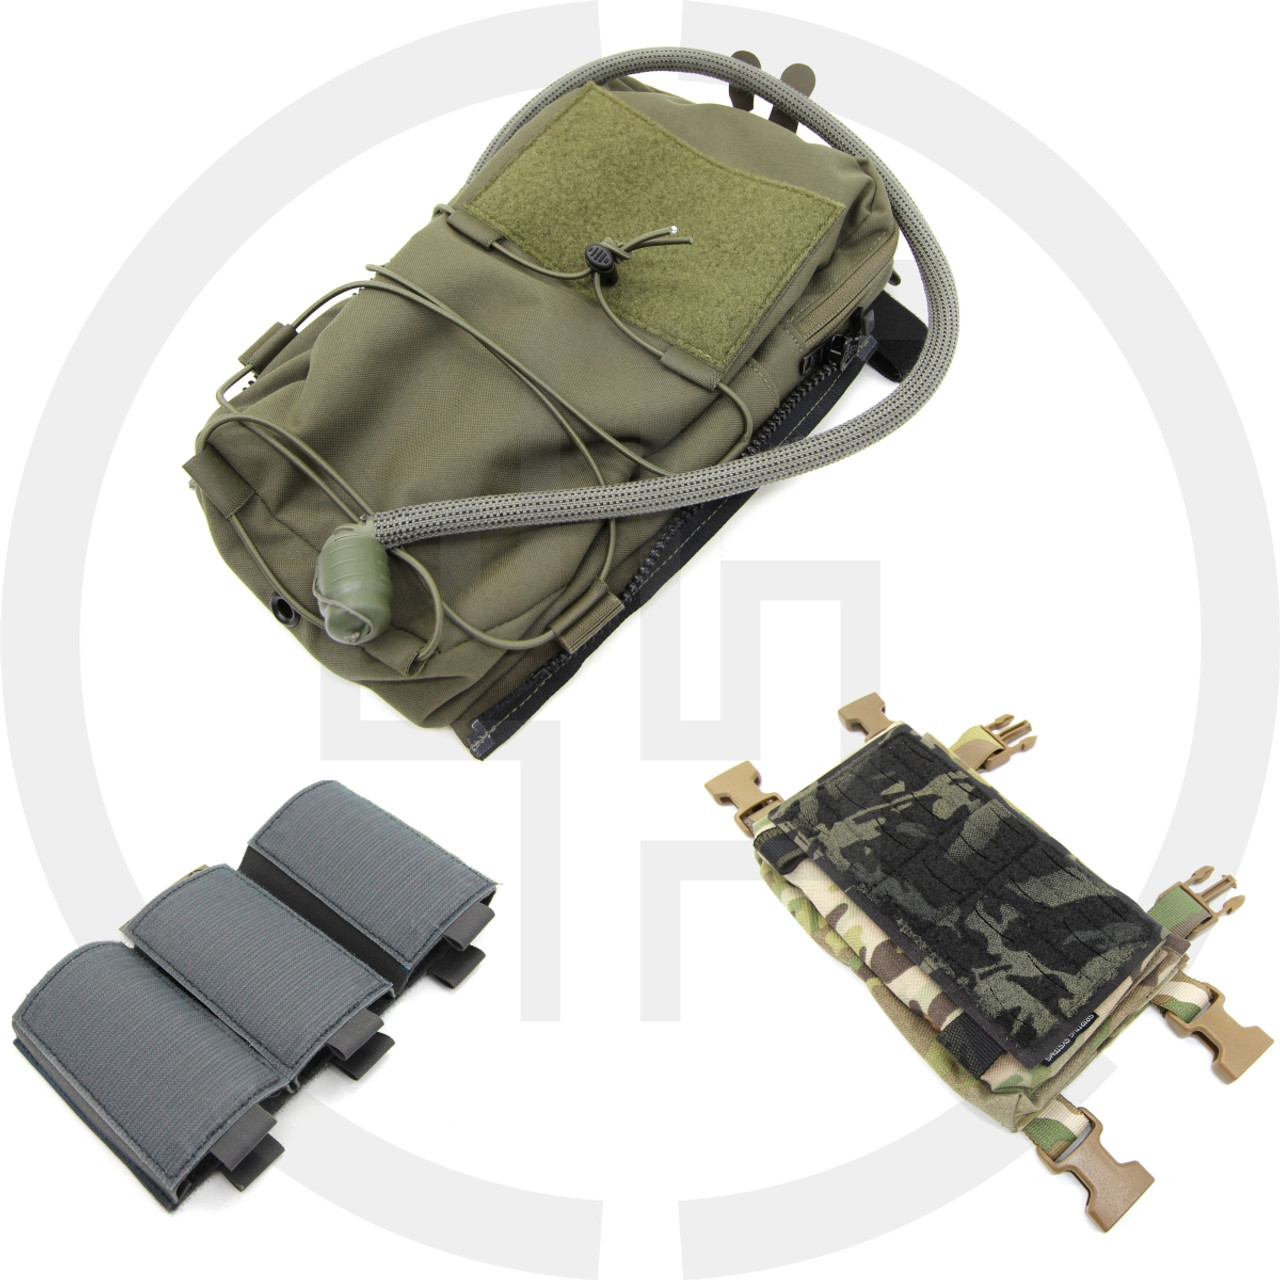 LV-119 Rear Covert Plate Bag - Spiritus Systems